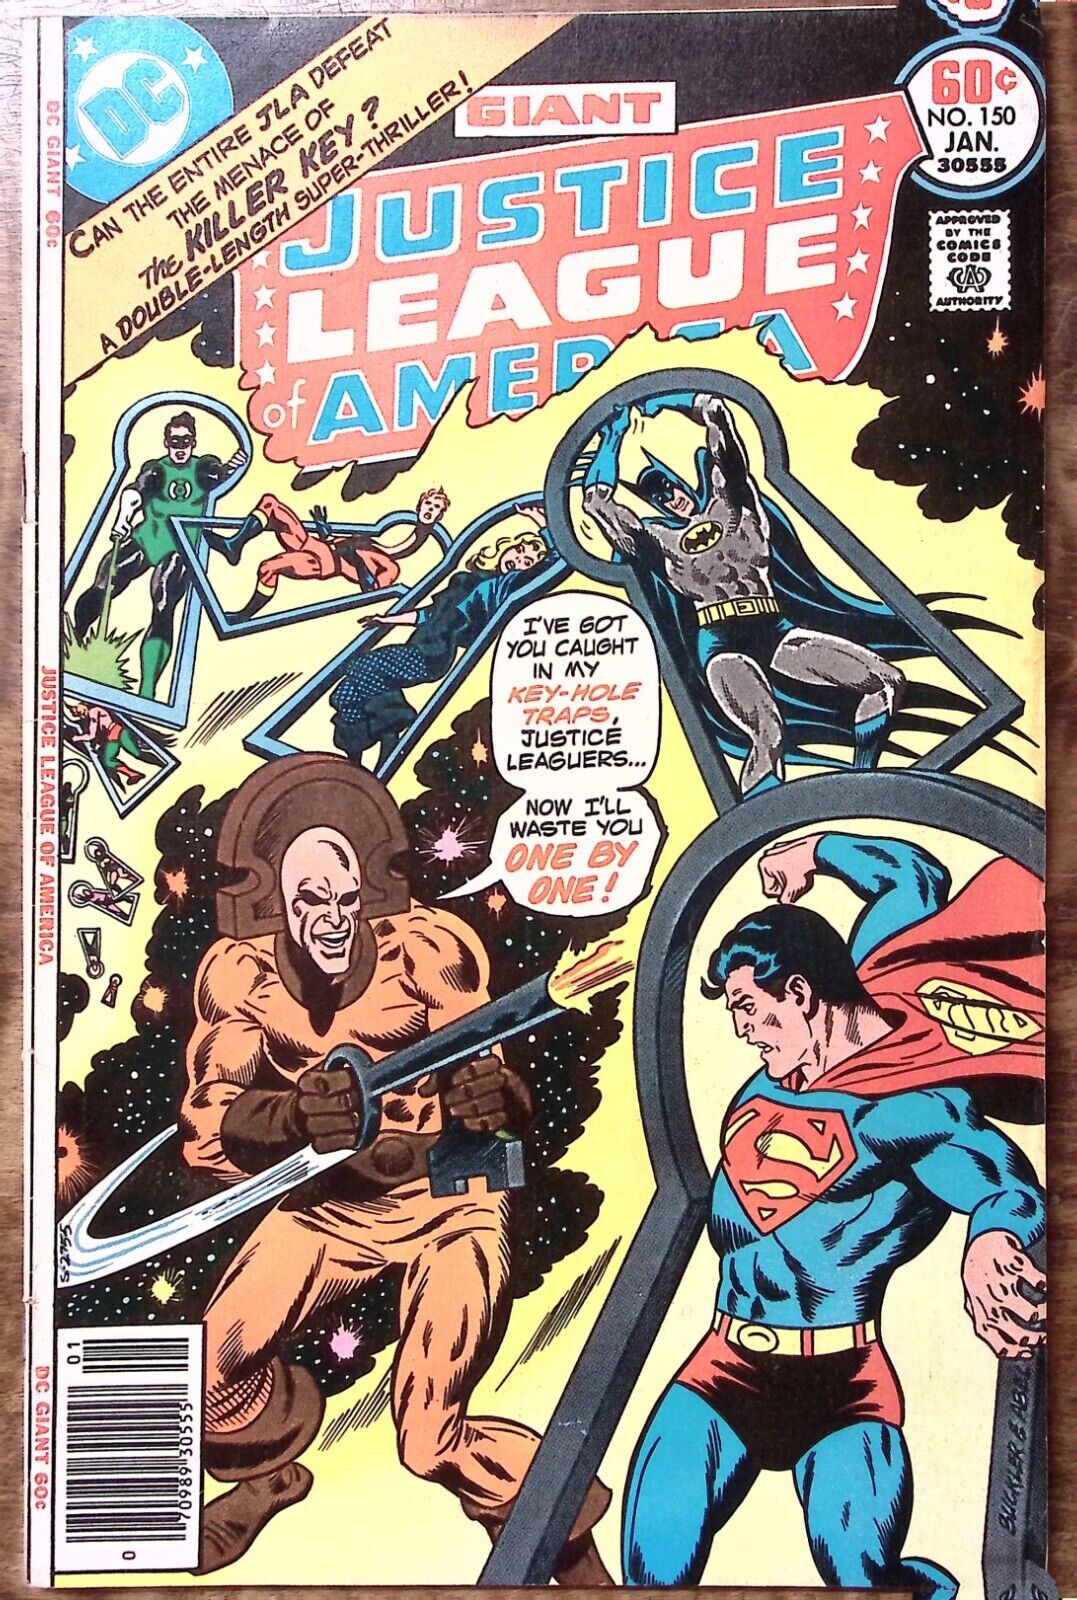 1978 GIANT JUSTICE LEAGUE OF AMERICA JAN #150 SUPERMAN BATMAN DC COMICS  Z3232